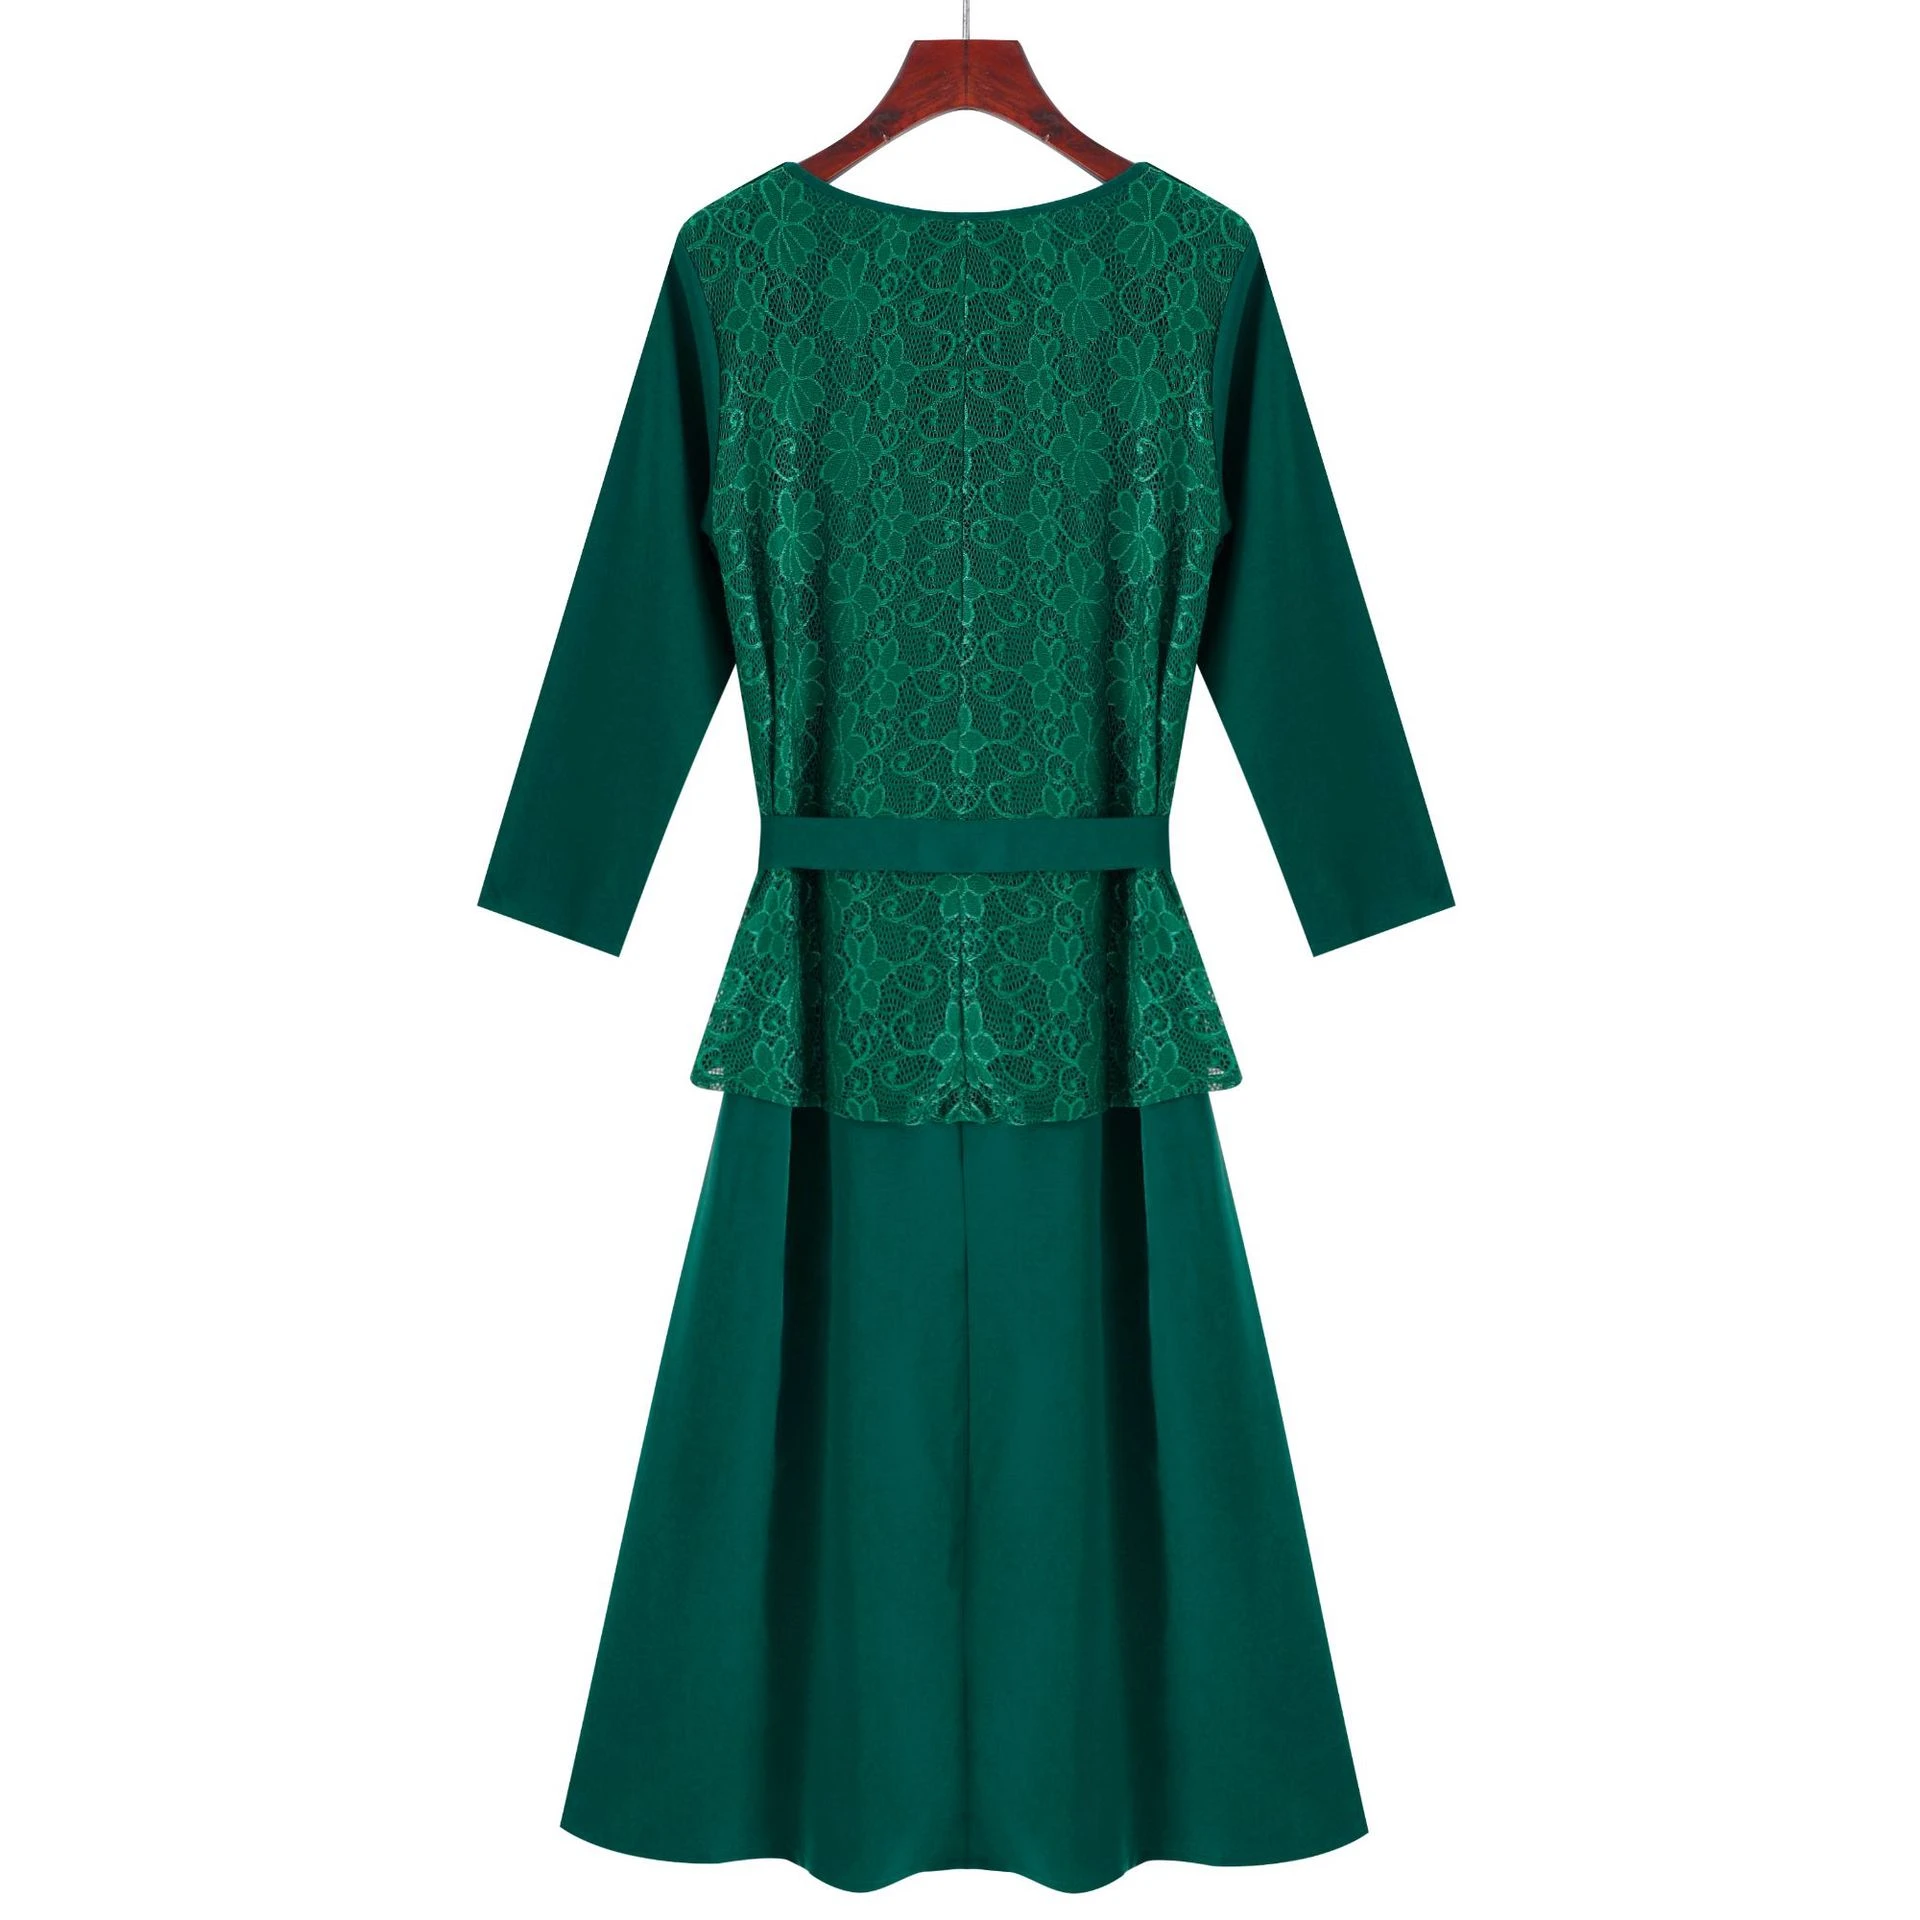 Muslim abaya green lace top double  layer Muslim ladies dress islamic clothing